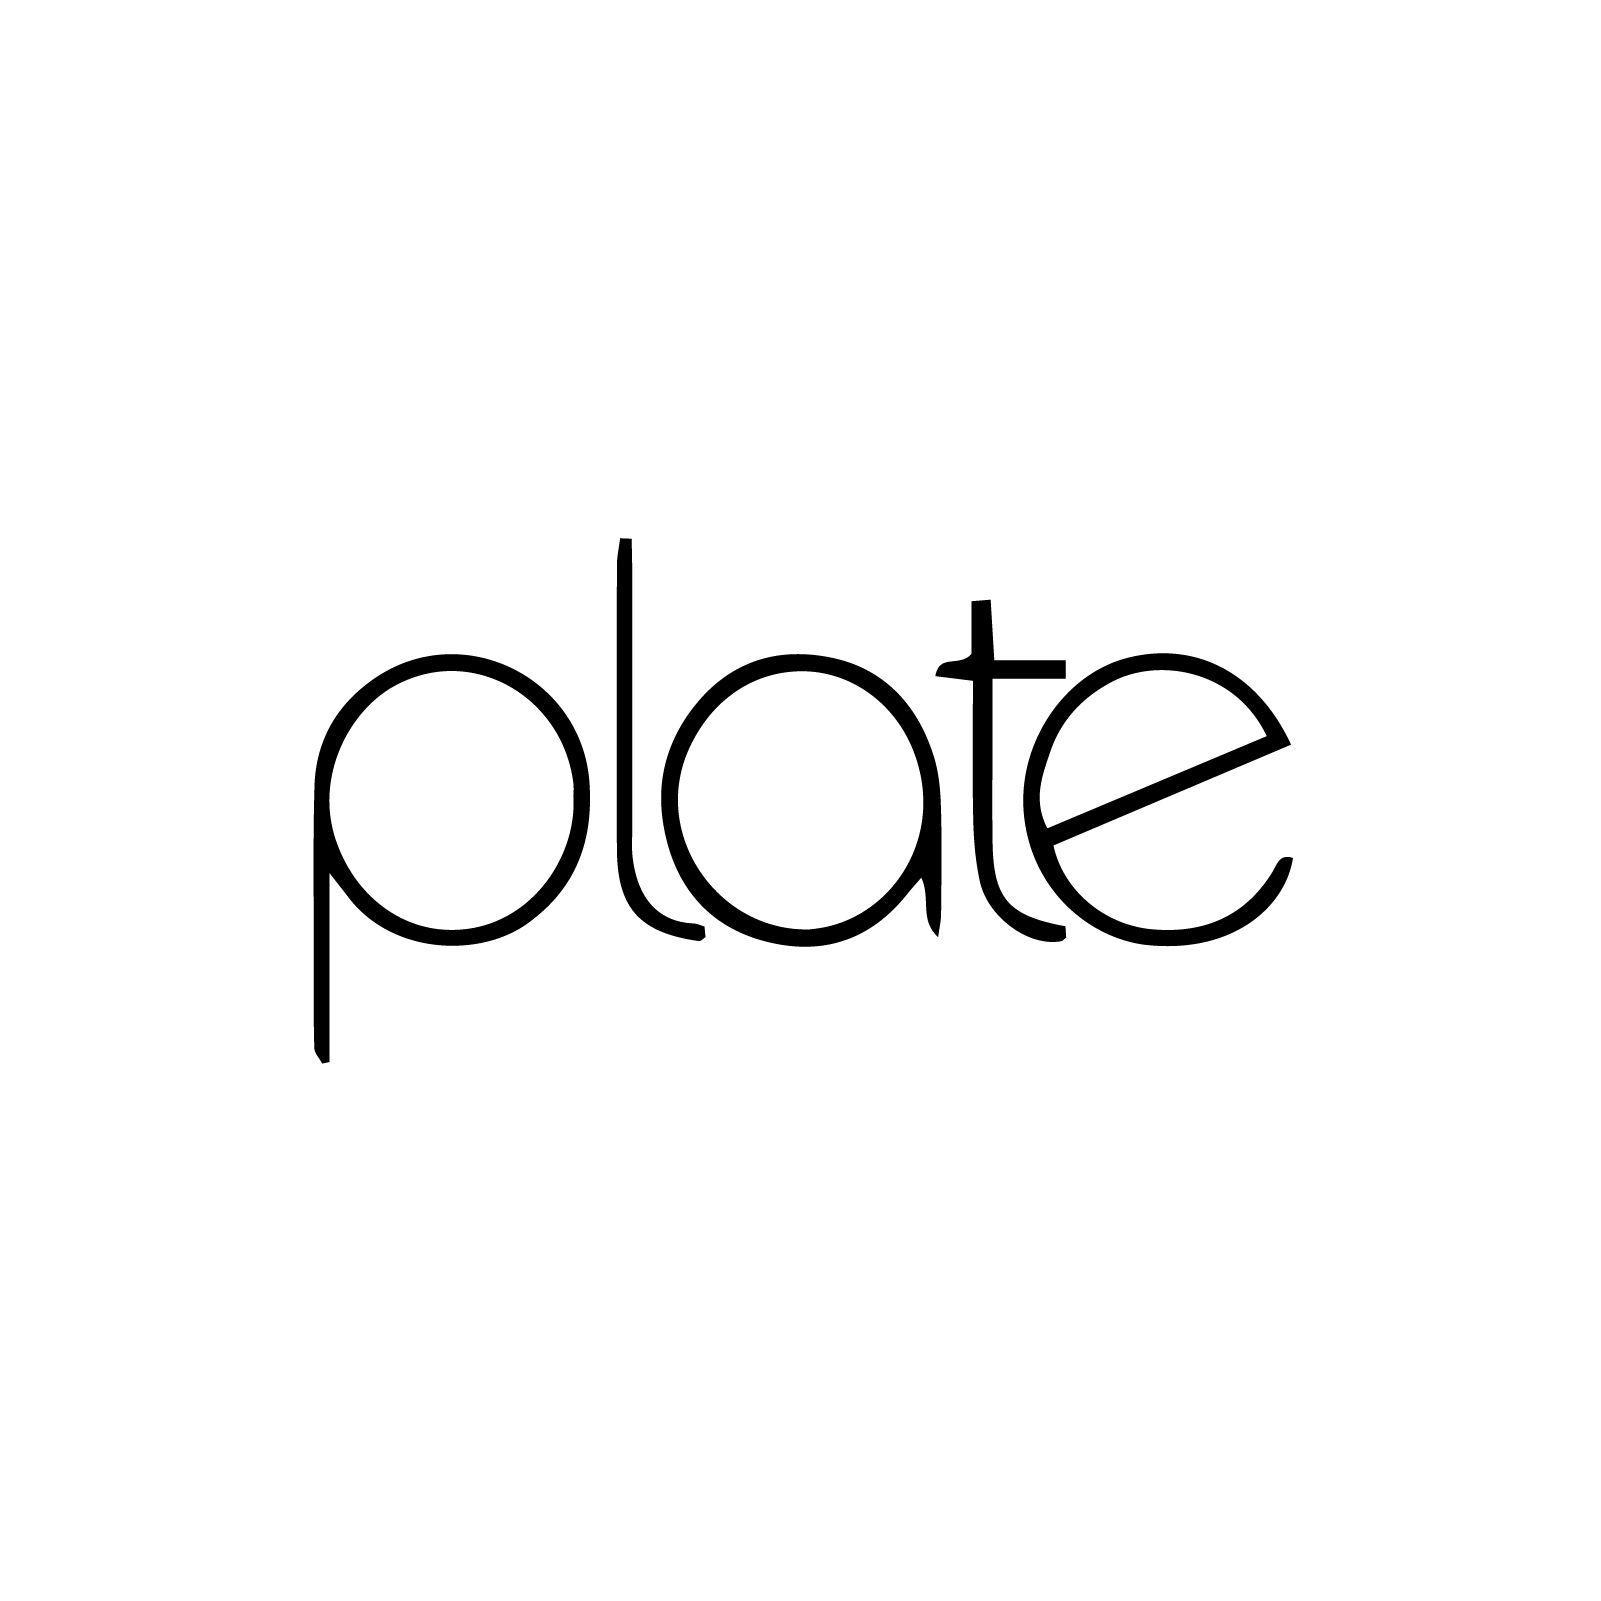 Press Logos_Plate.png